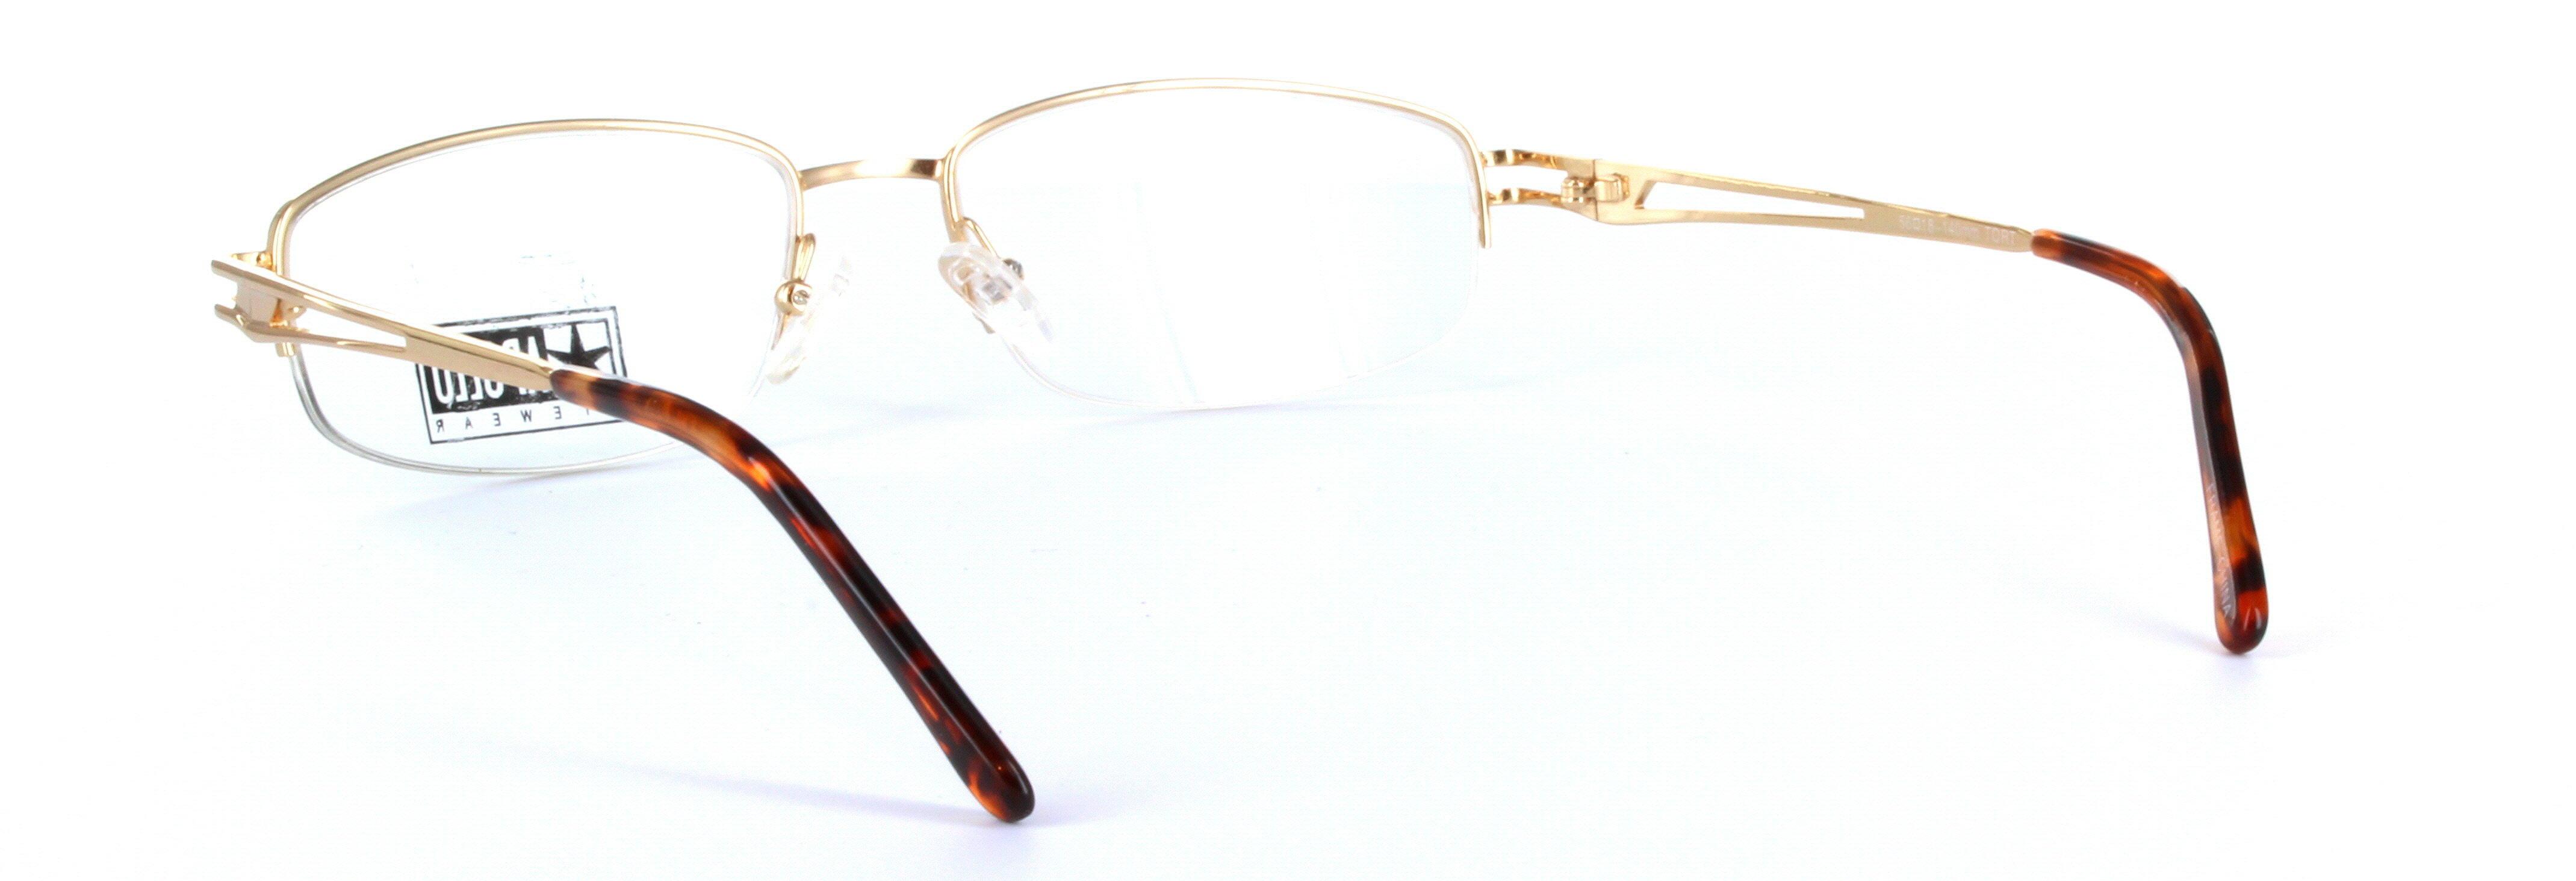 Cabernet Gold Semi Rimless Rectangular Metal Glasses - Image View 3